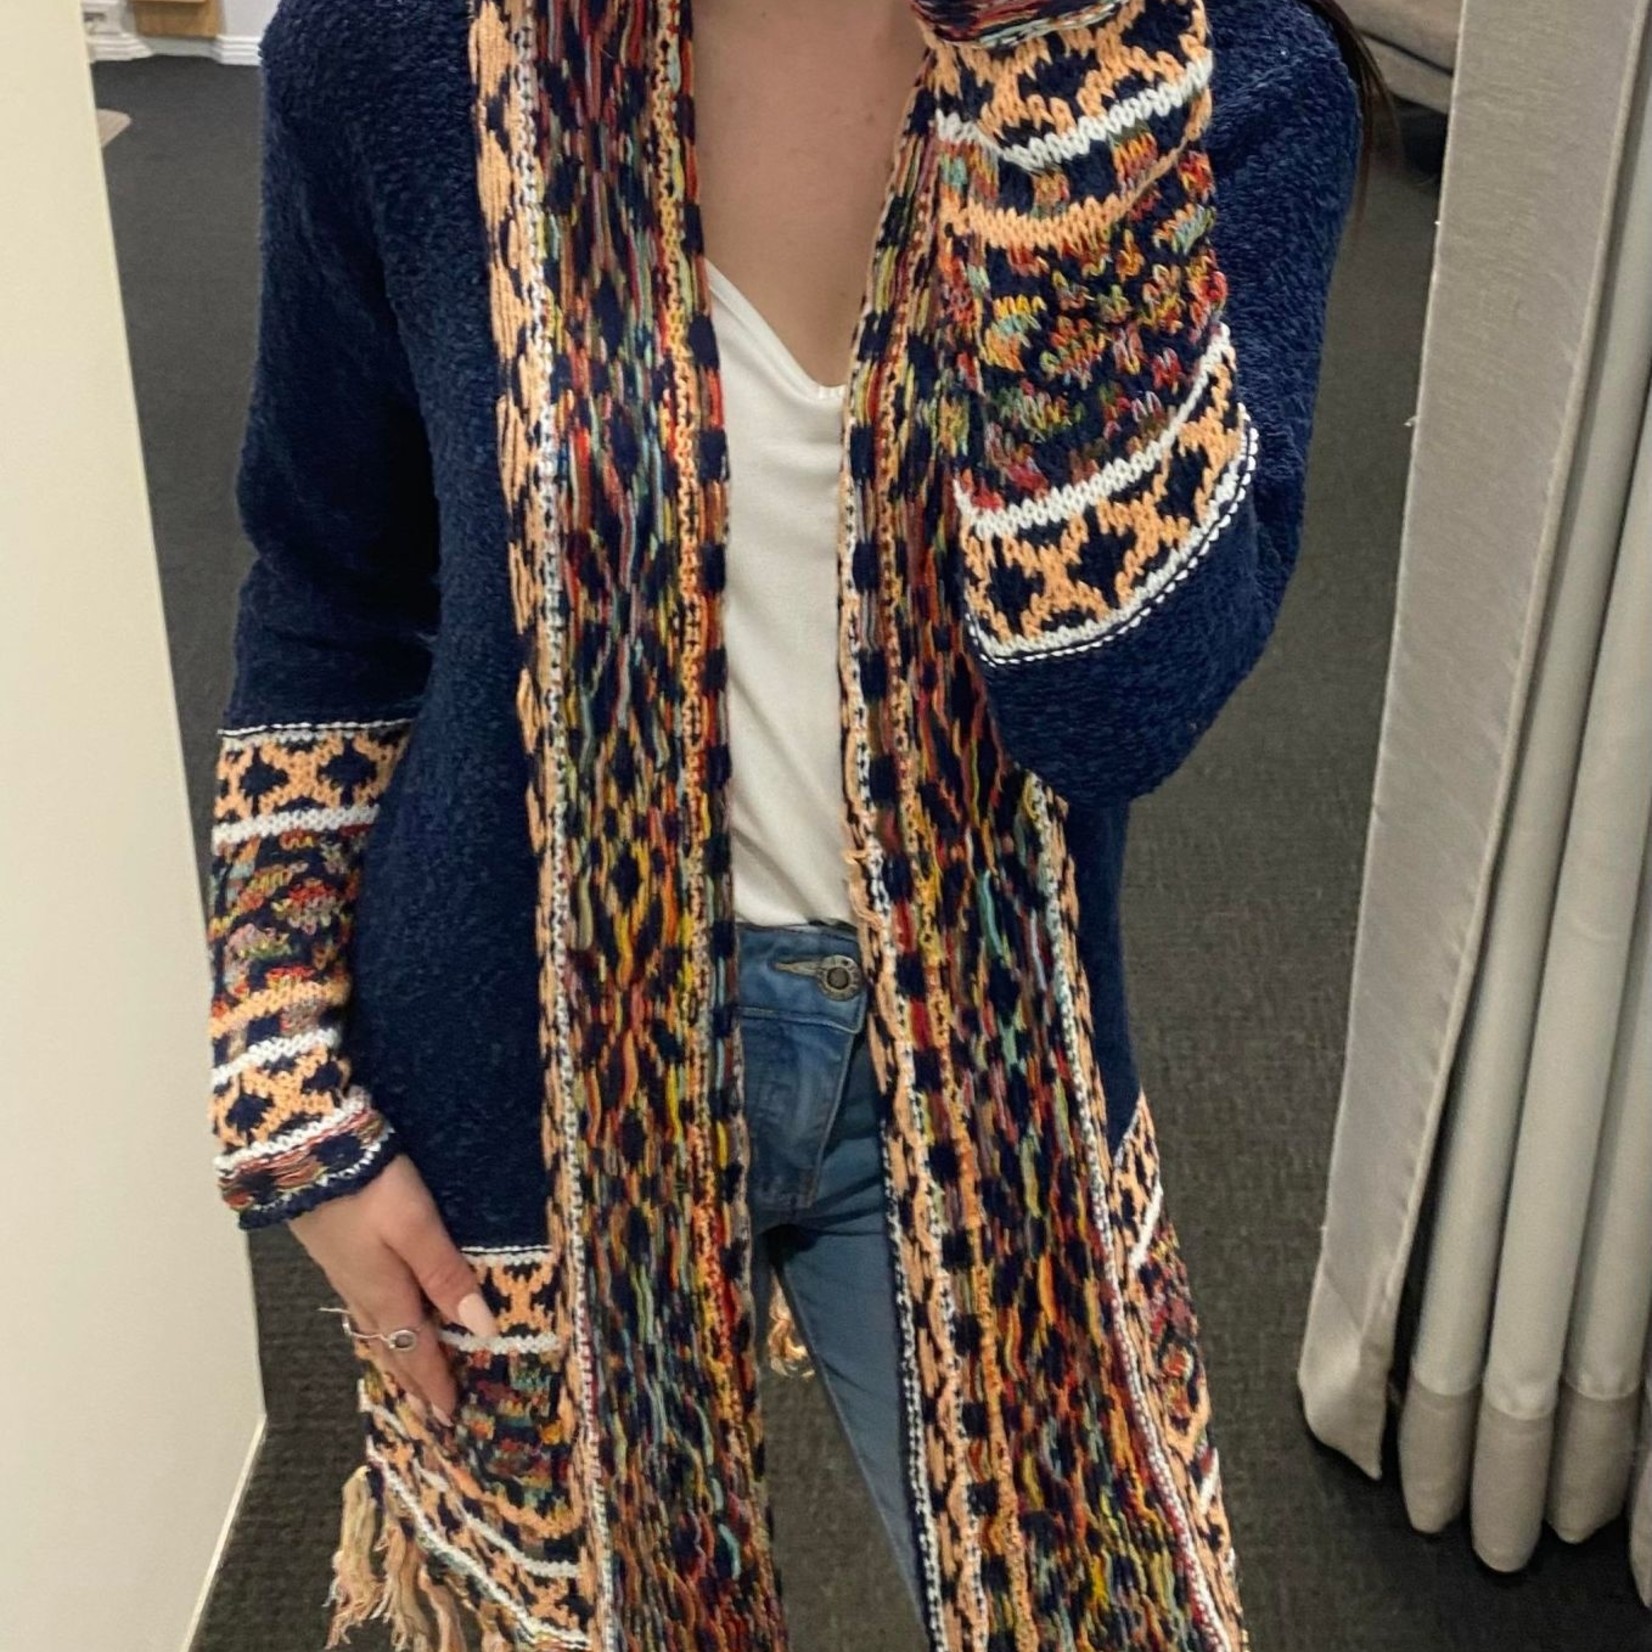 Isabella Boho Aztec knit cardi - Navy/Multi